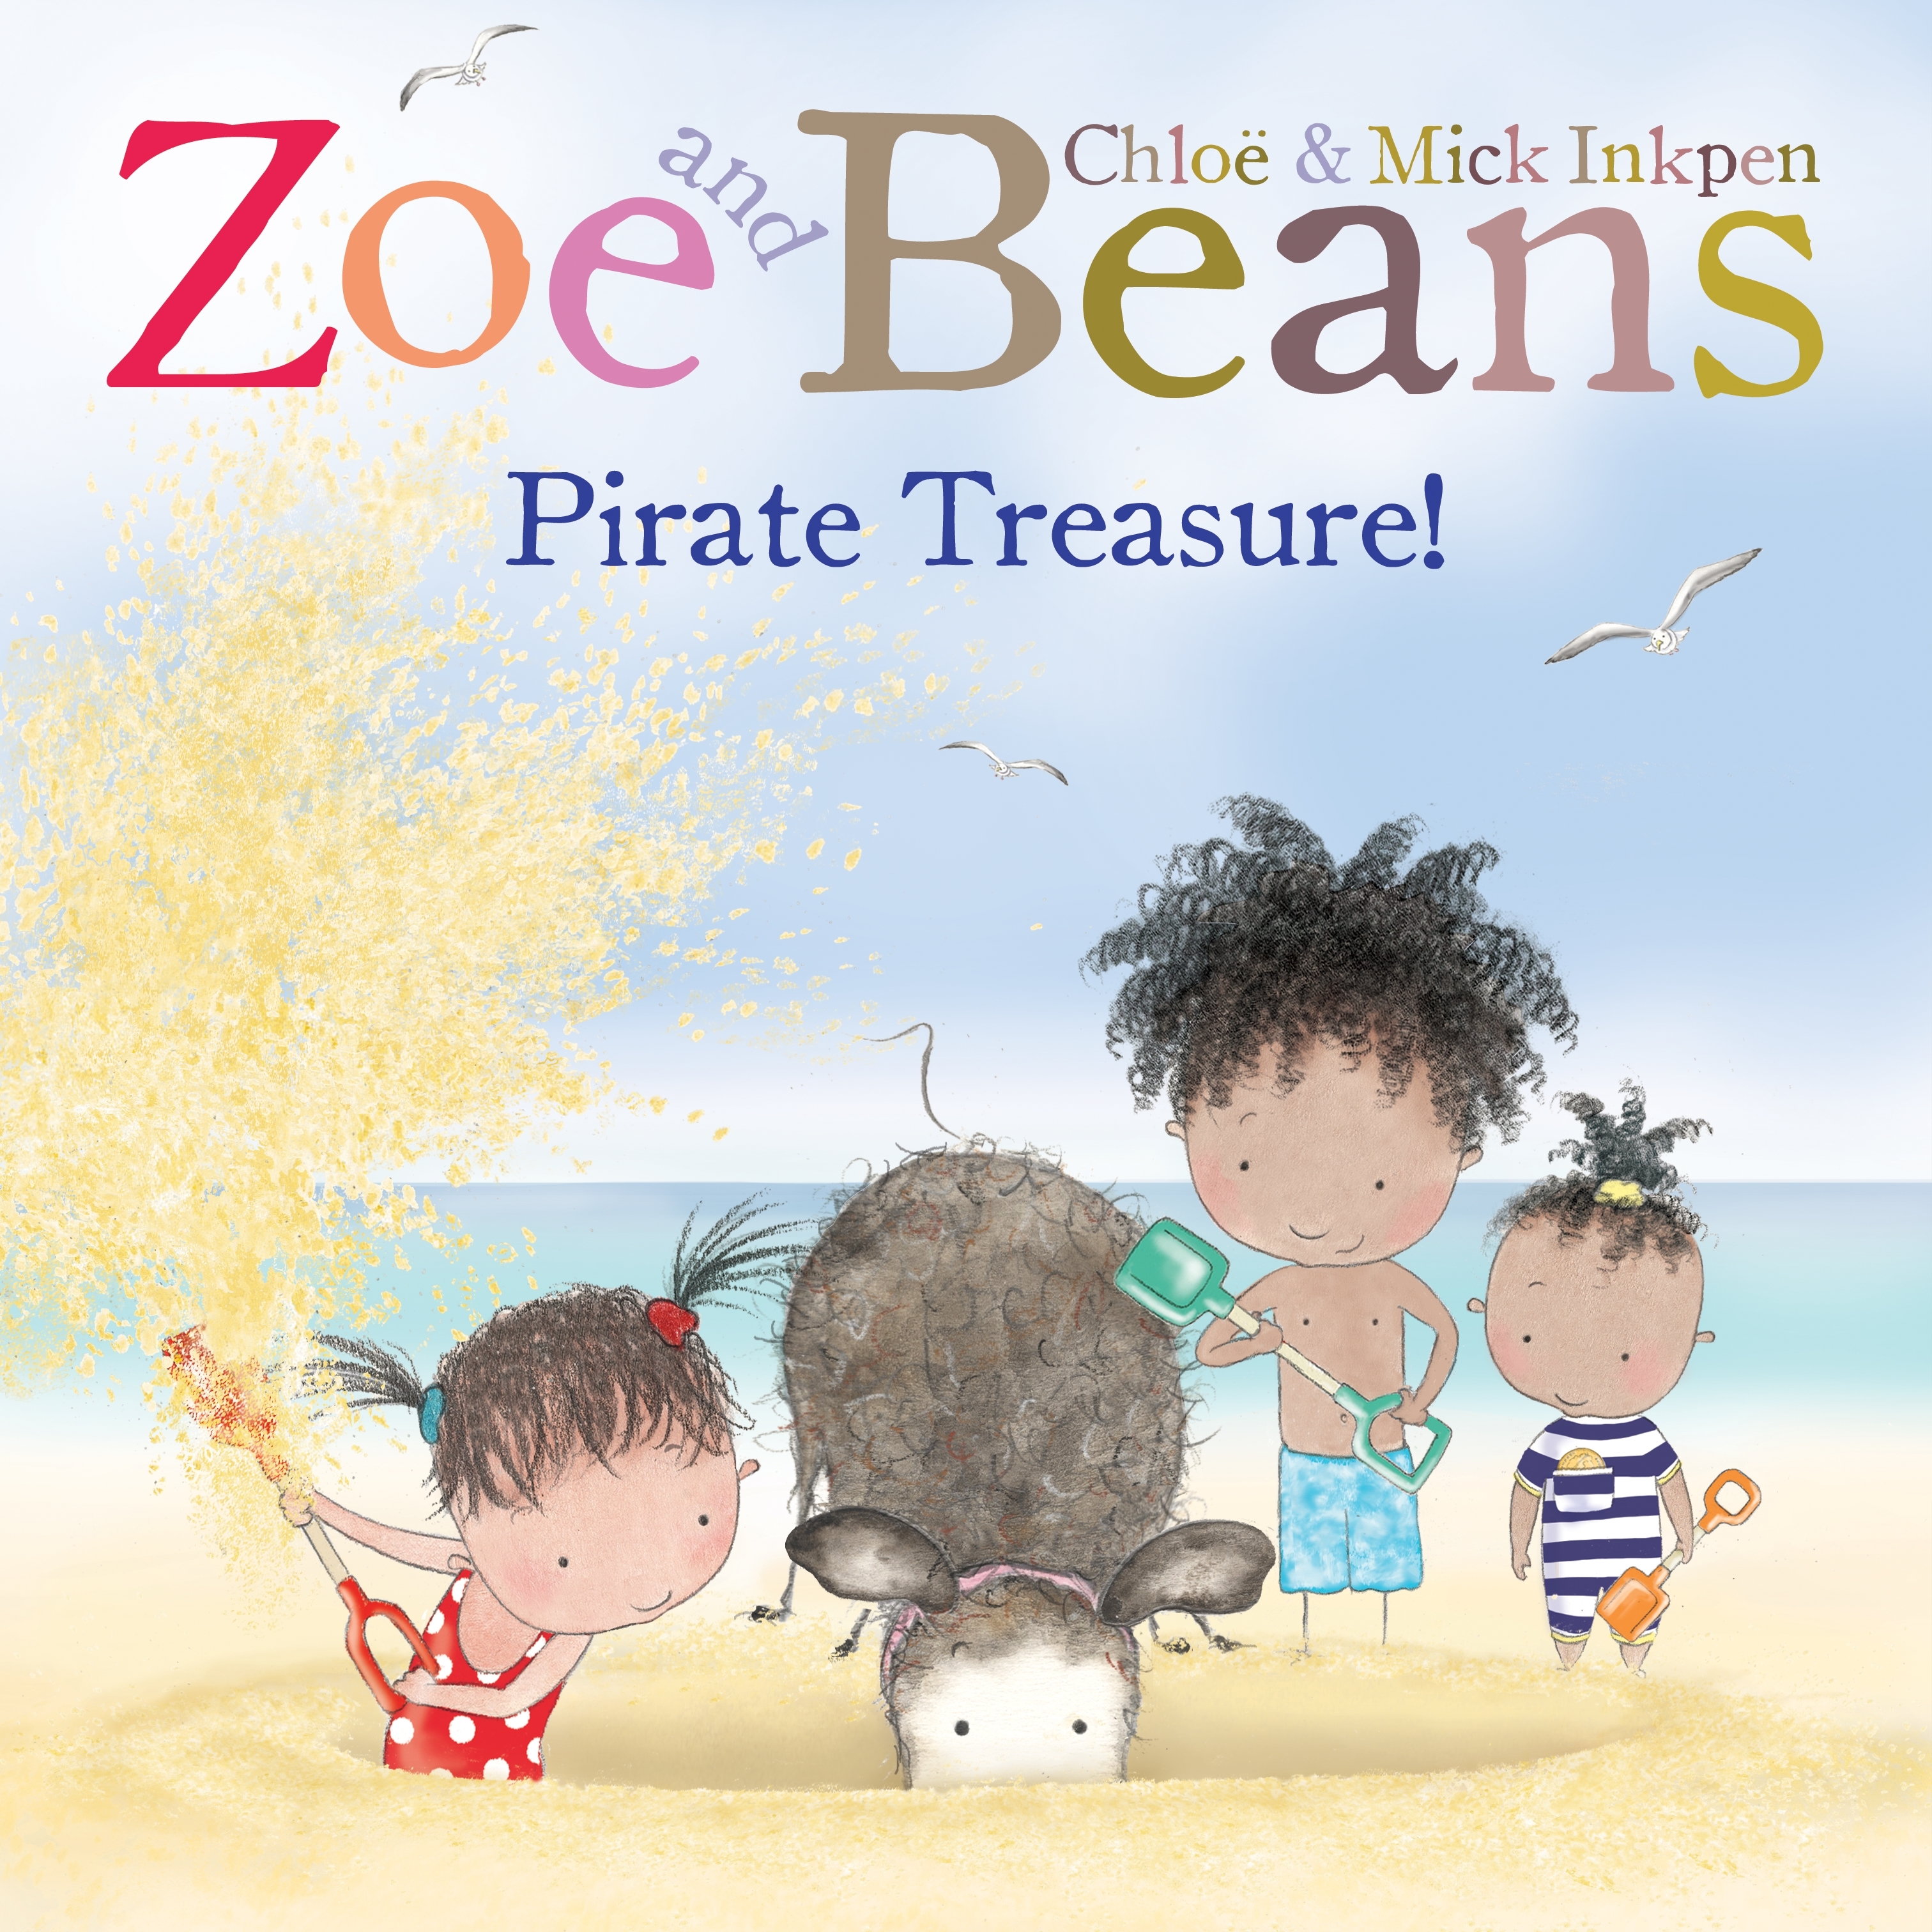 Zoe and Beans Pirate Treasure!